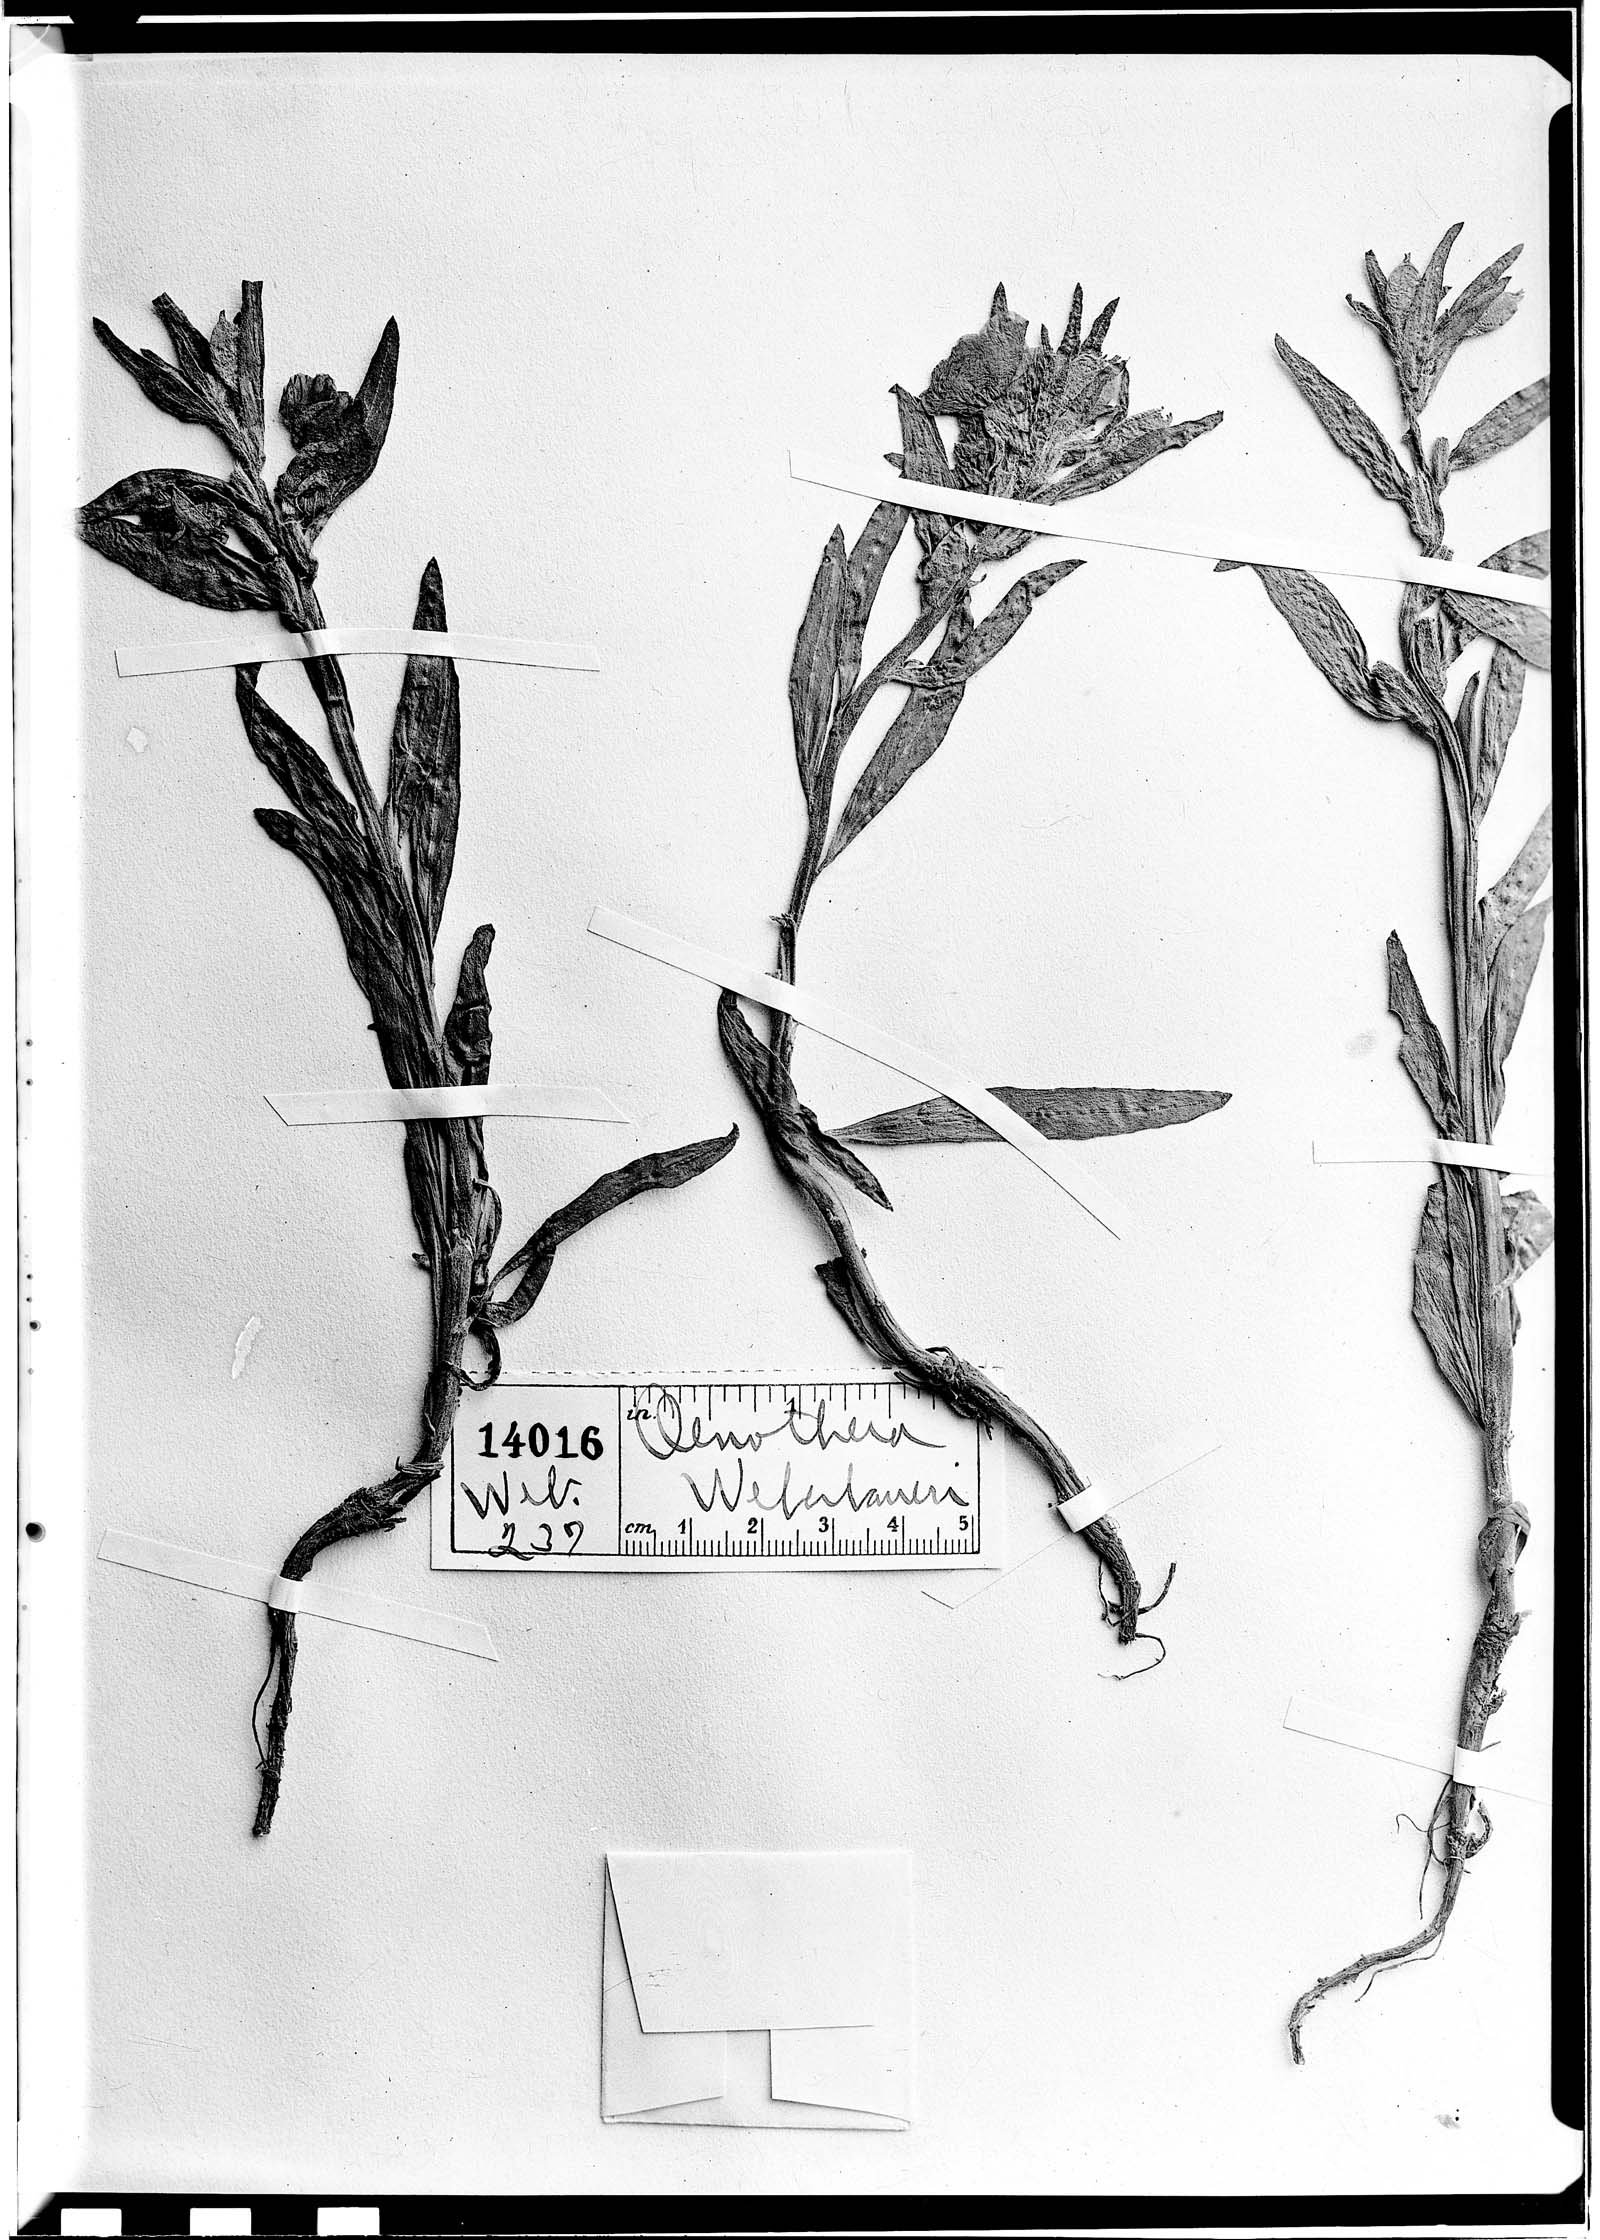 Oenothera sandiana image